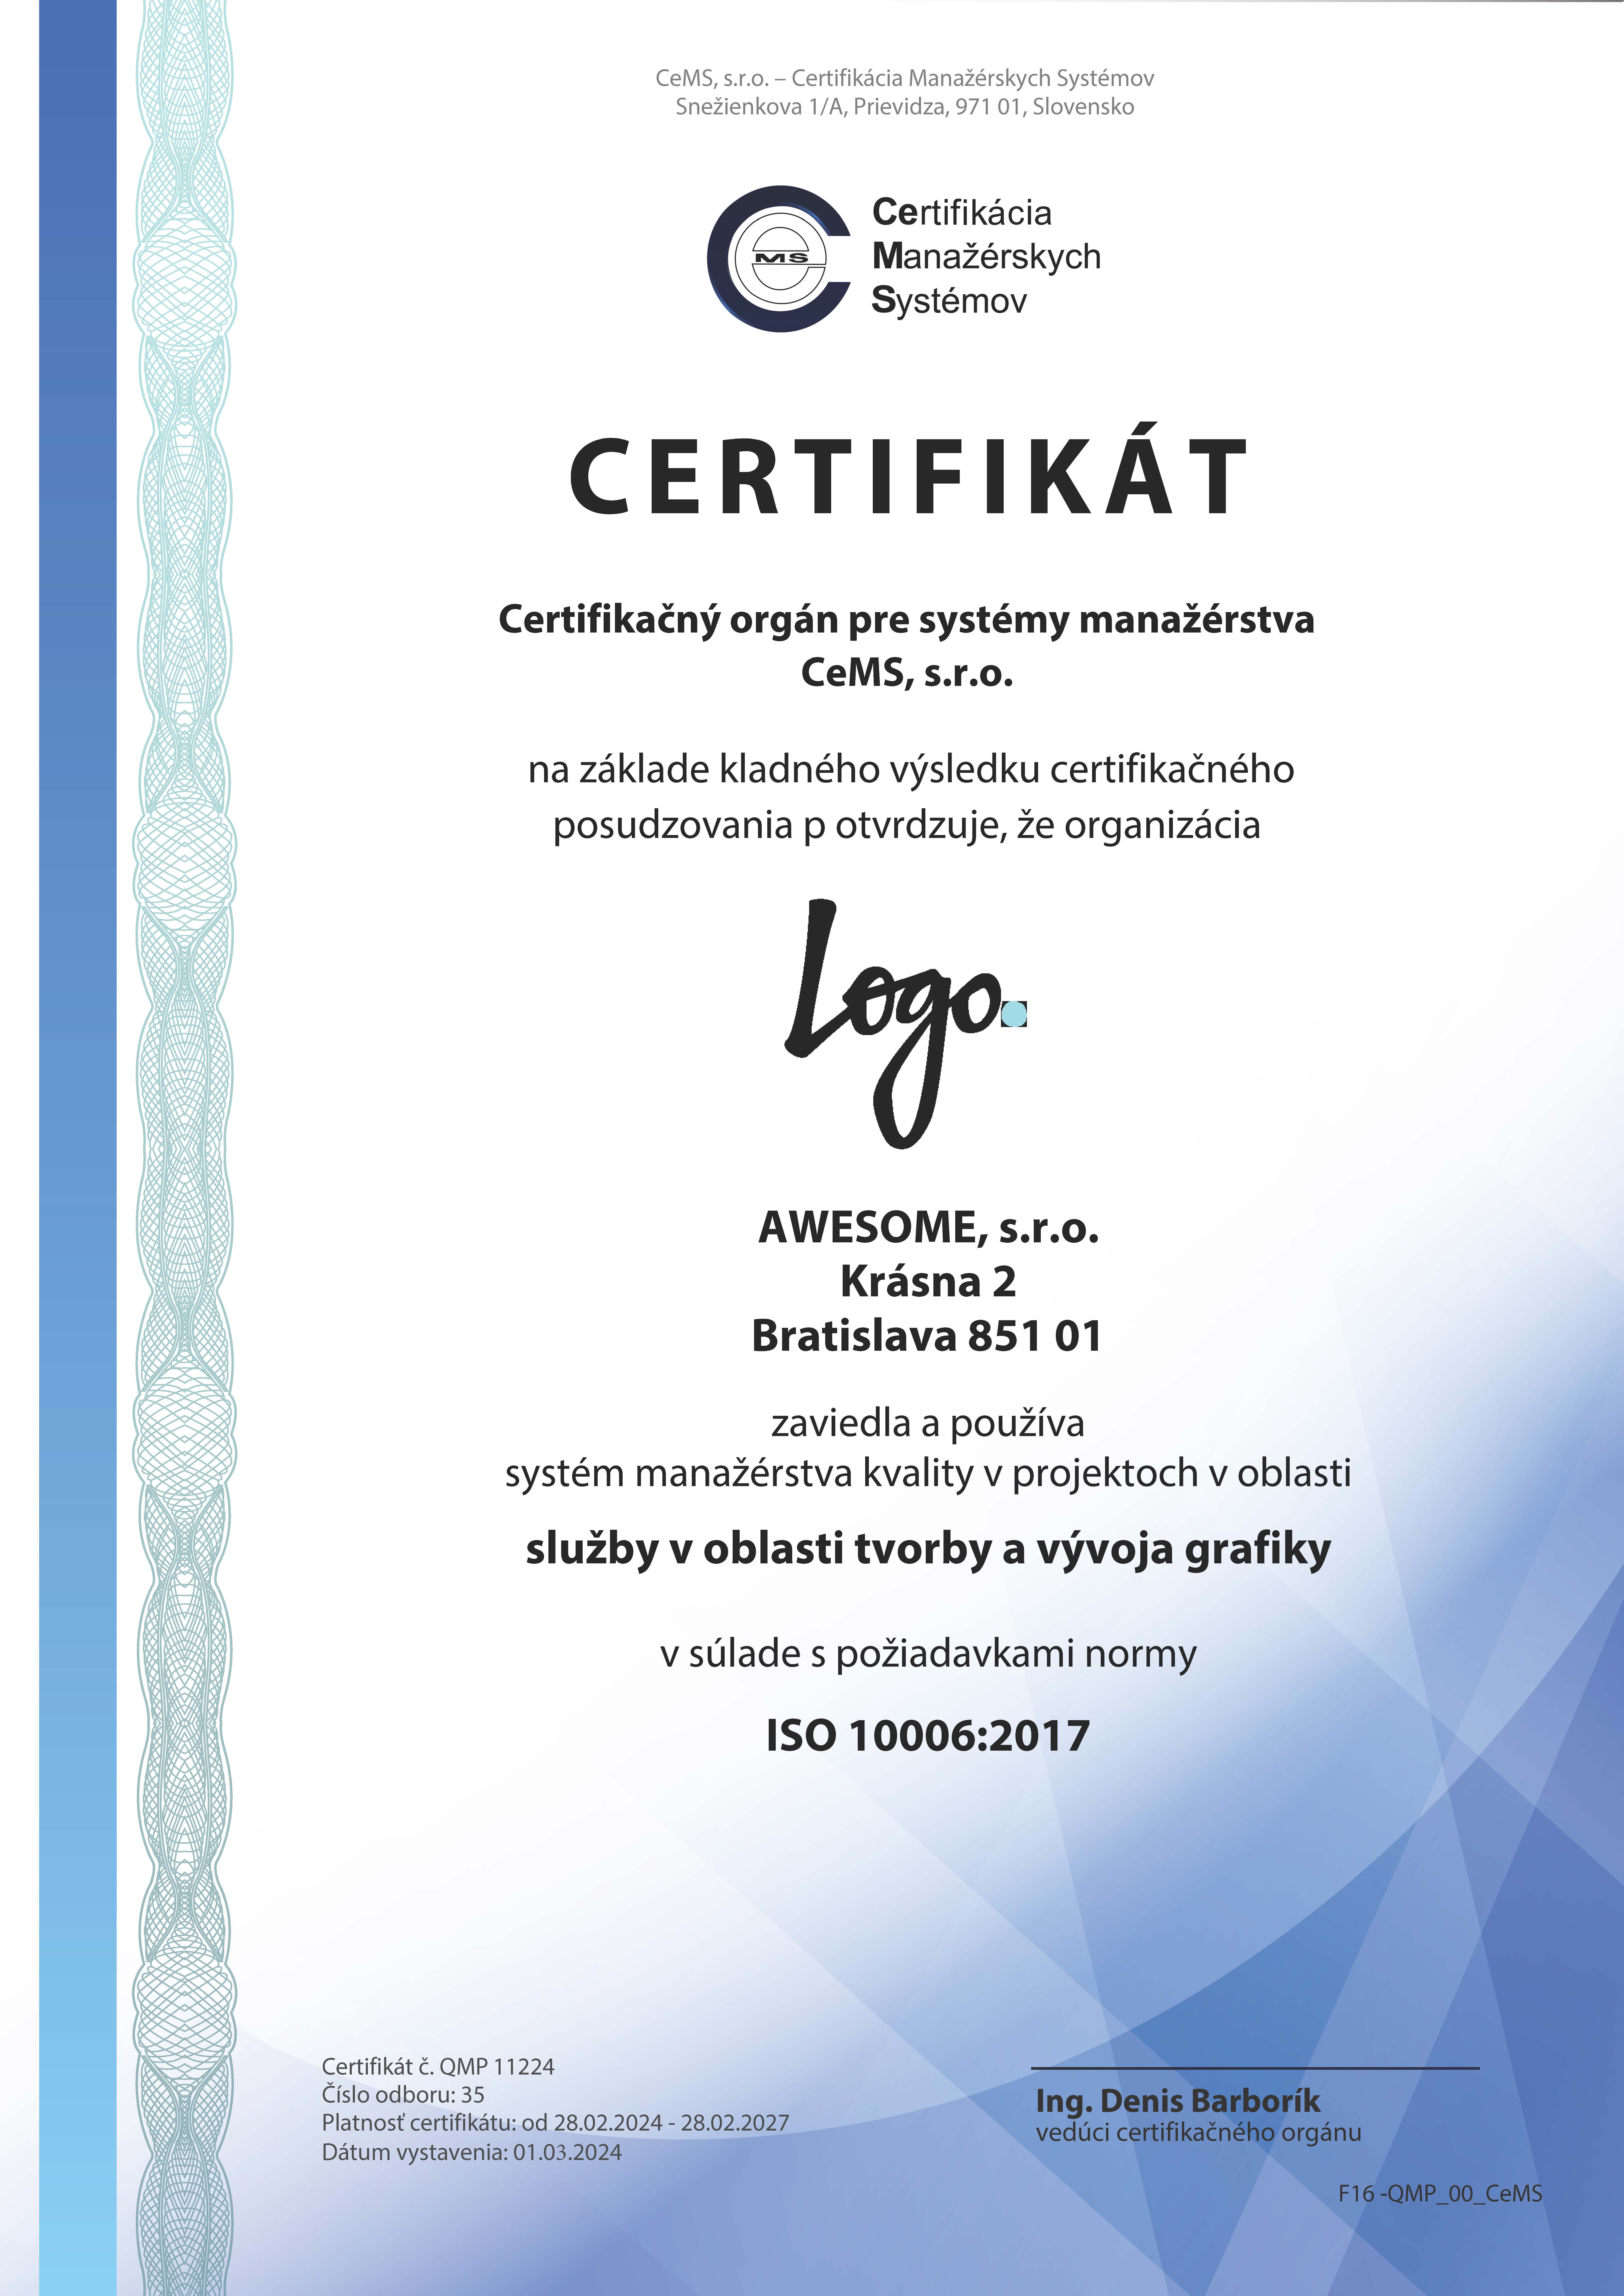 vzor certifikátu ISO 10006 od CeMS